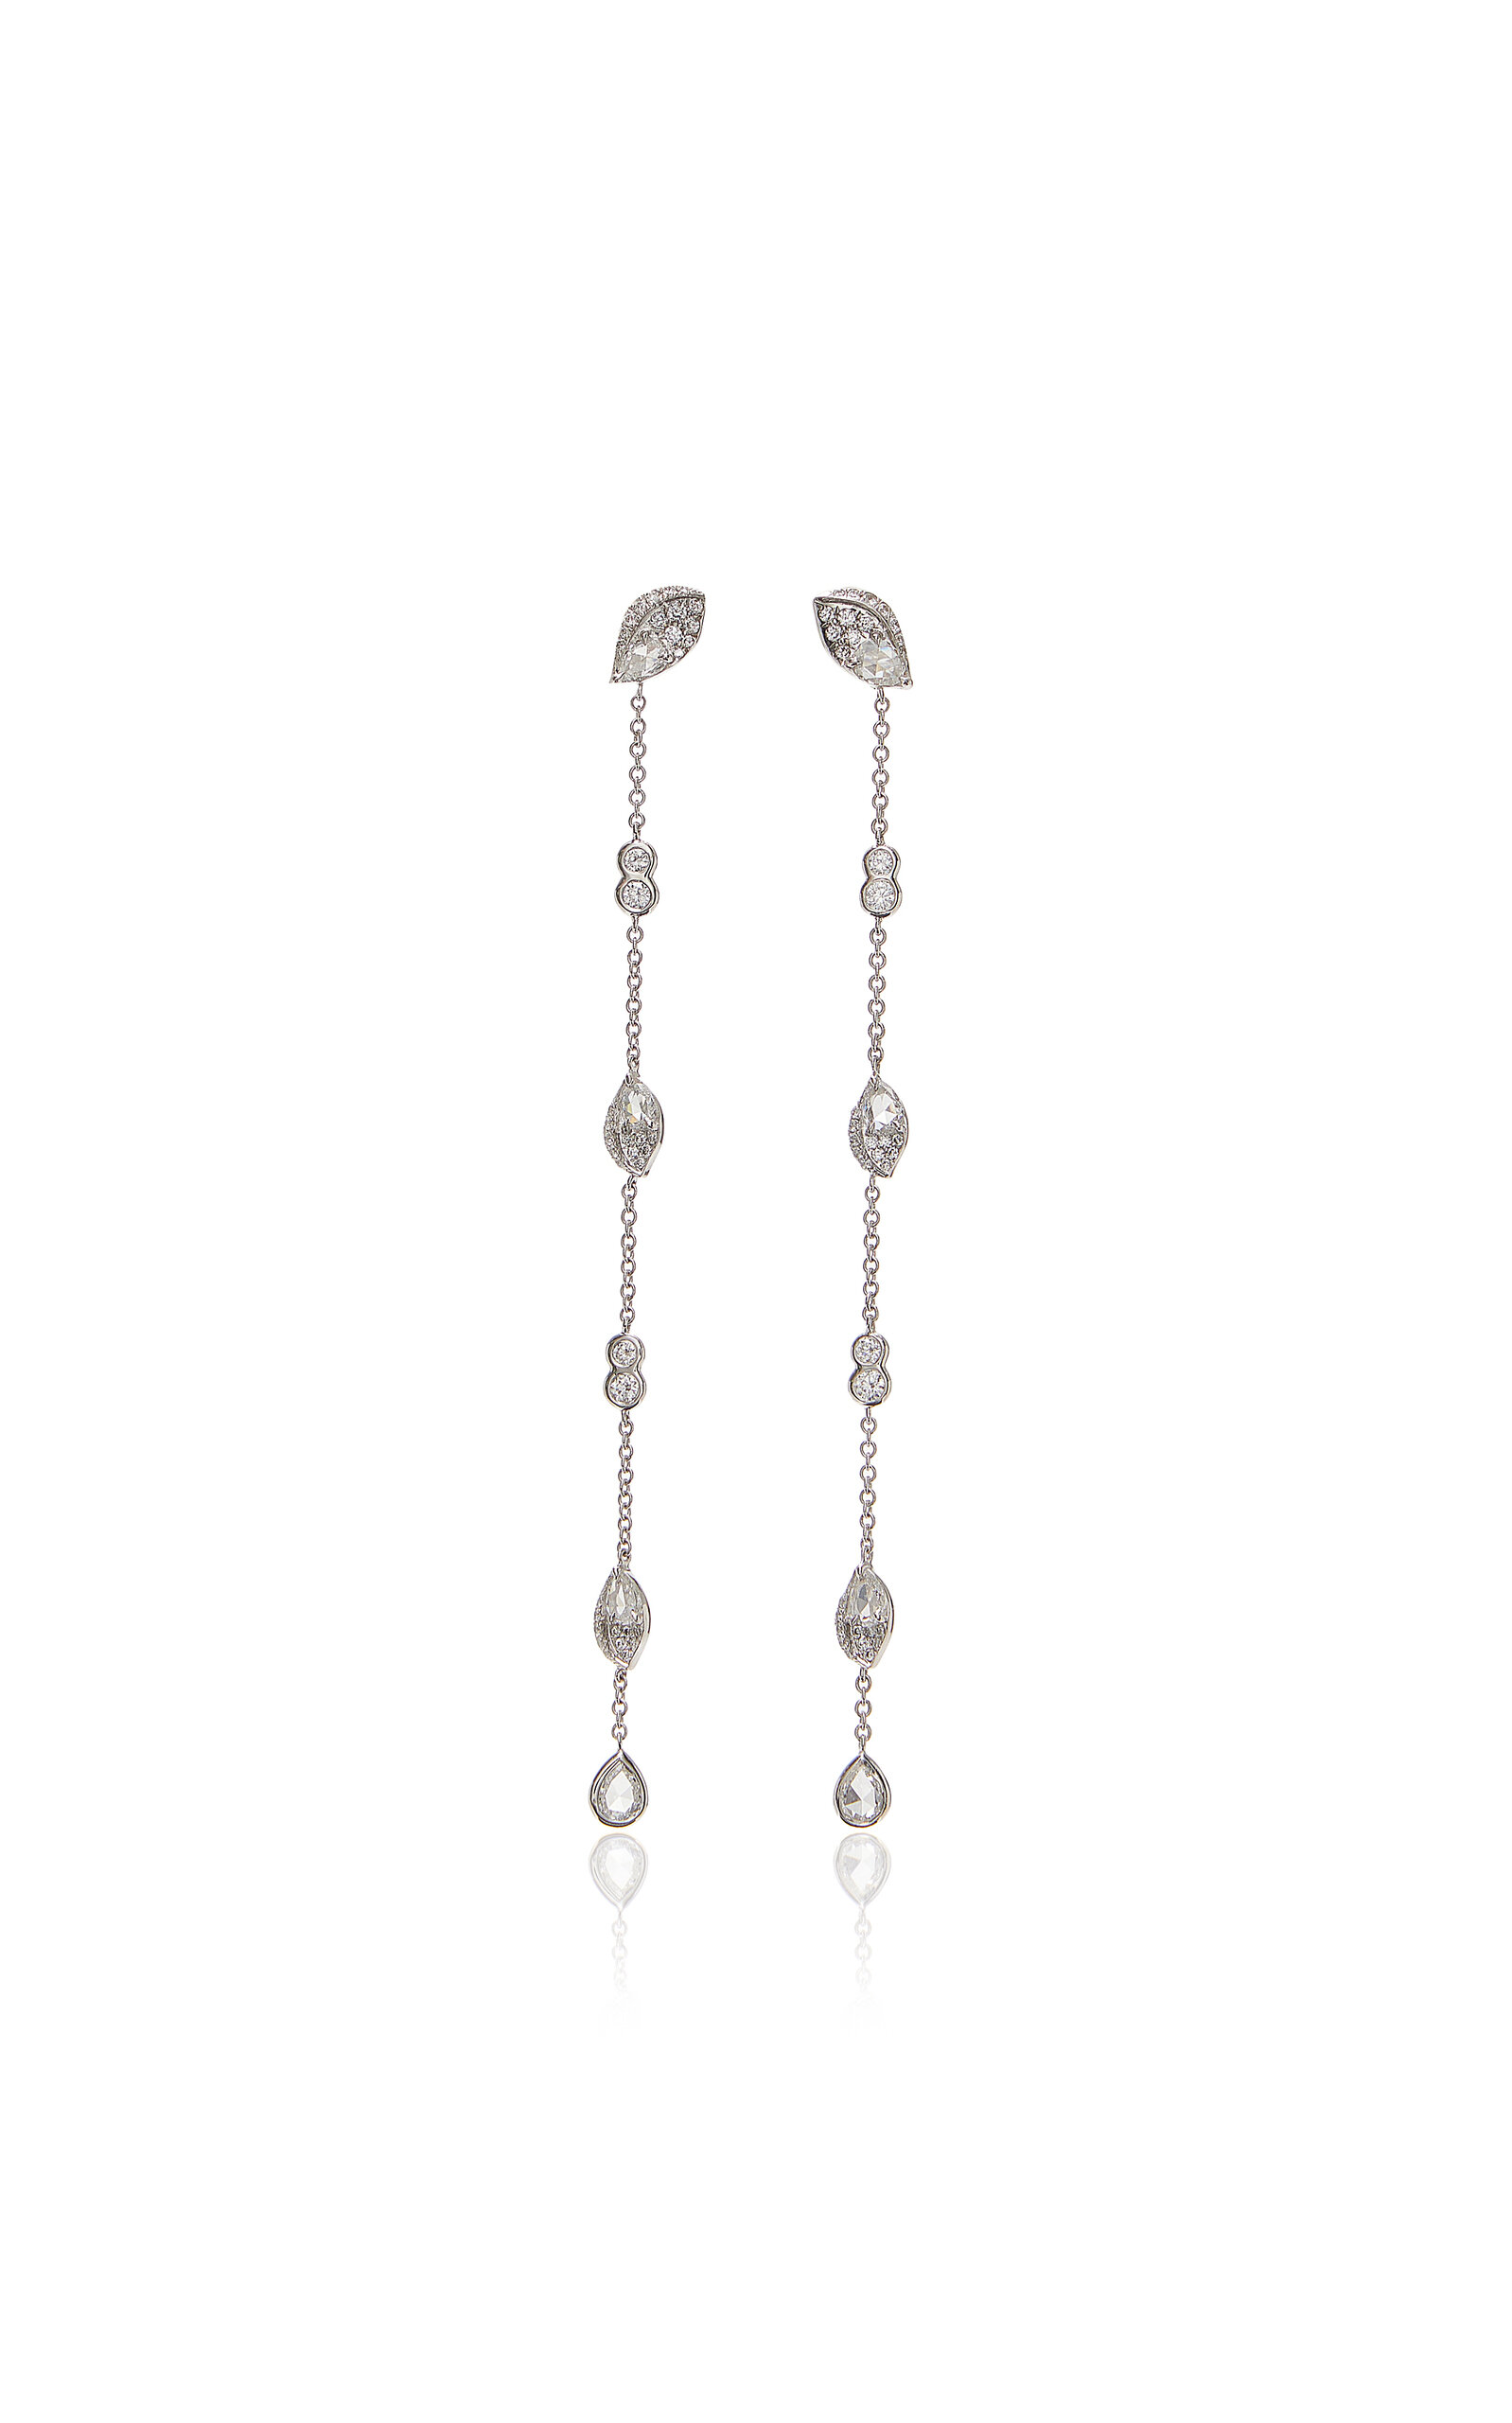 Frangipani 18K White Gold Diamond Earrings